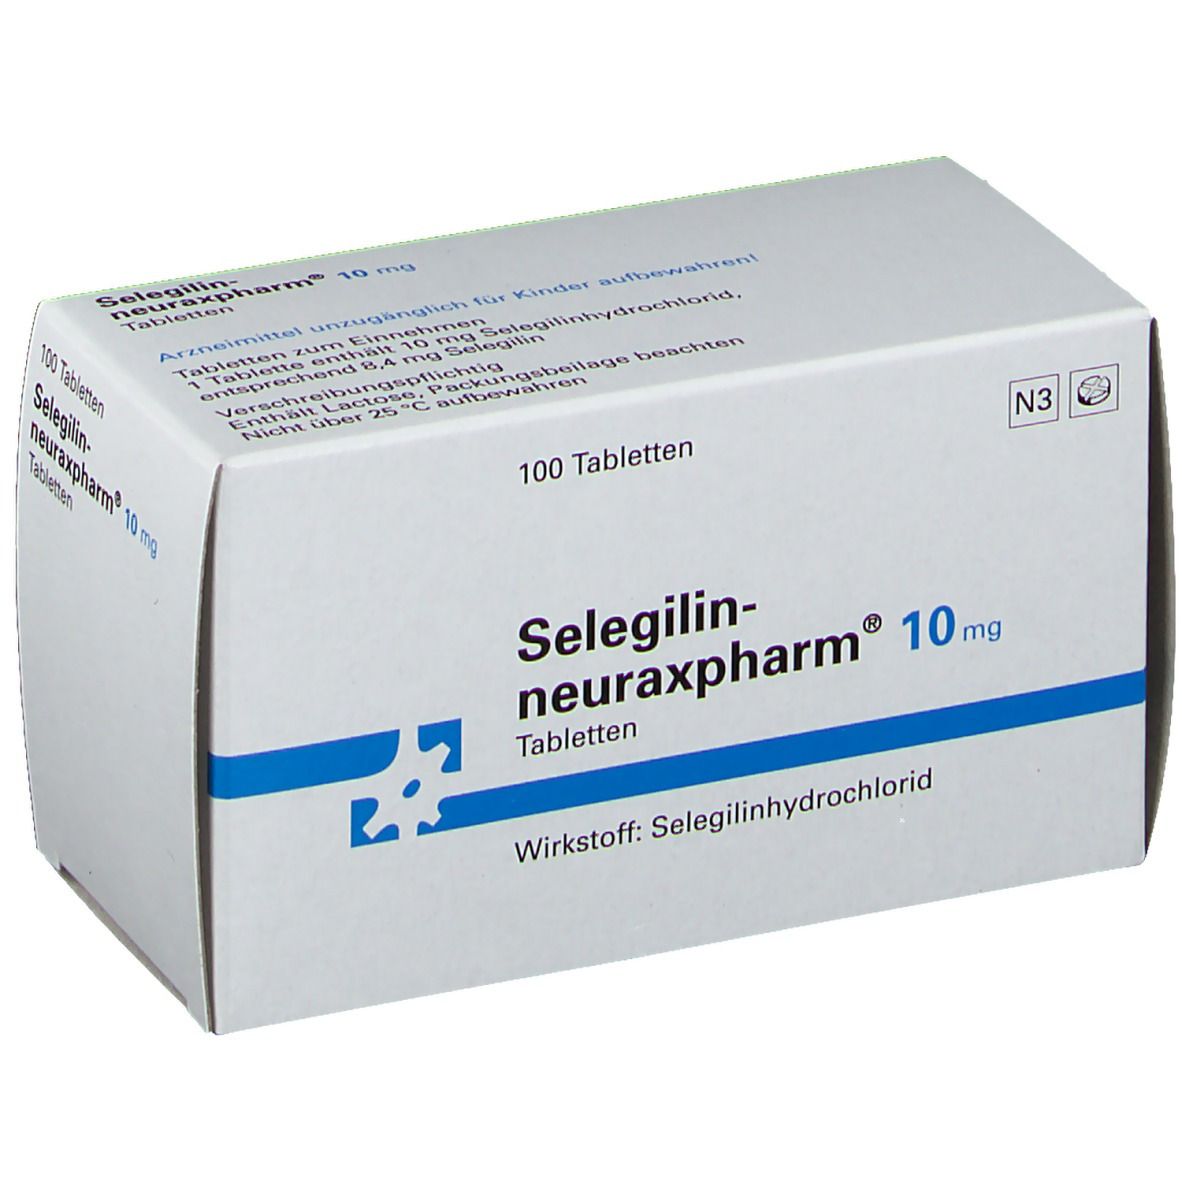 Selegilin-neuraxpharm® 10 mg